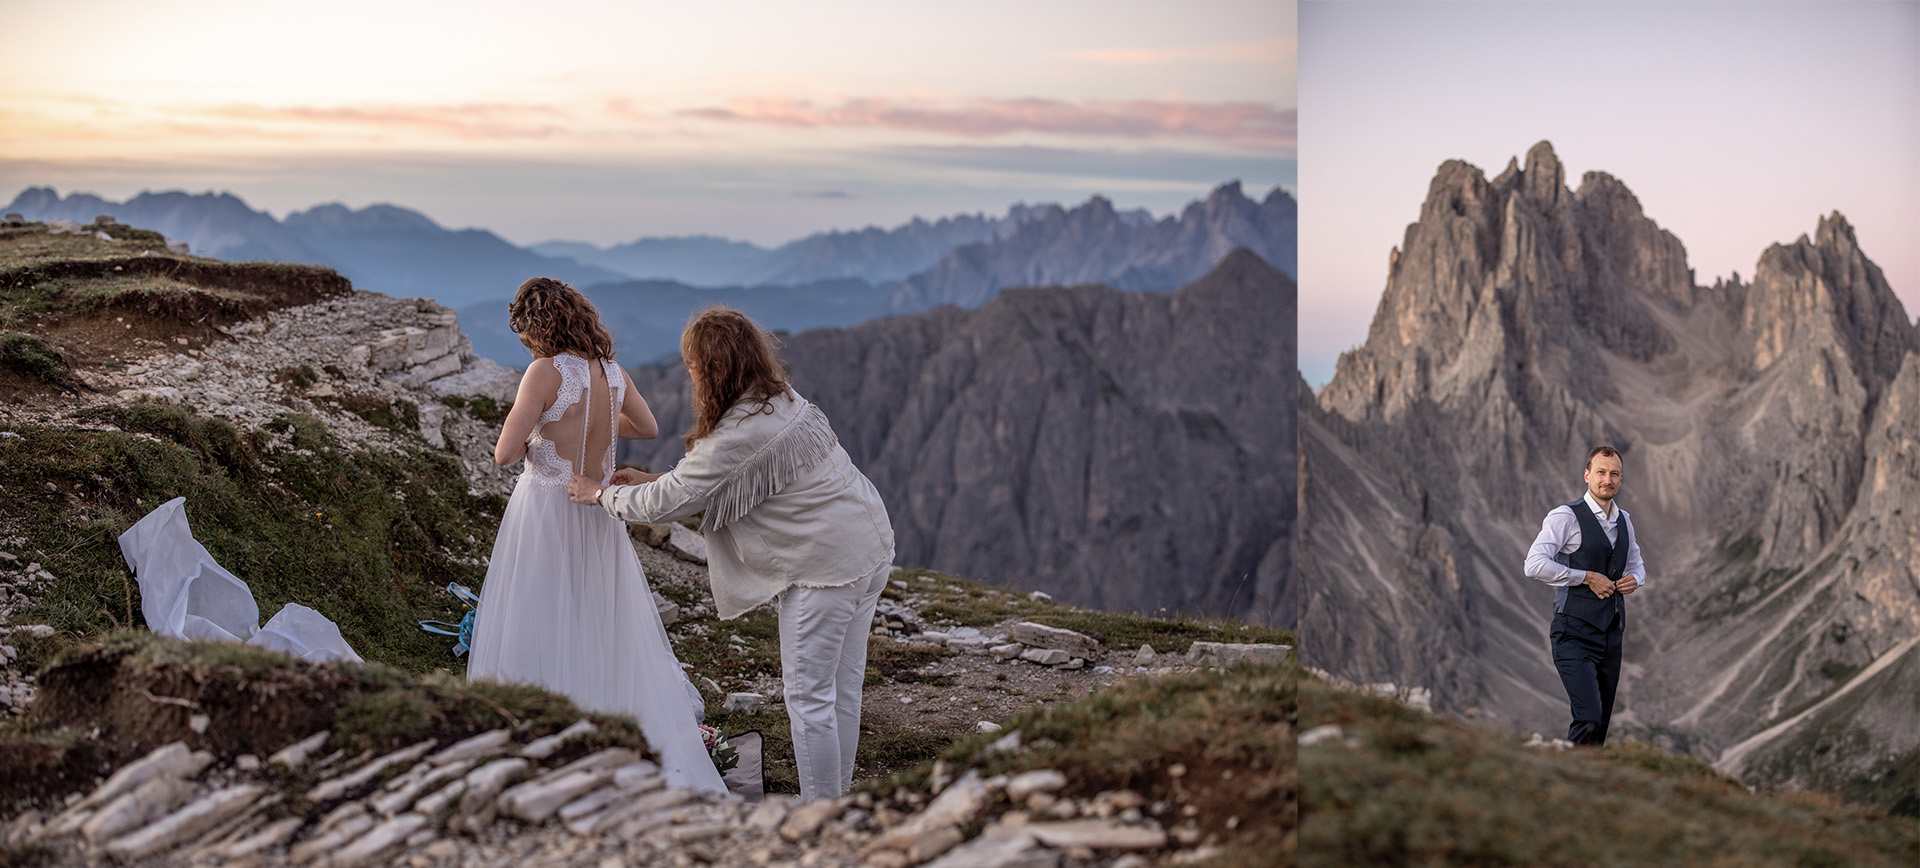 mountain elopement in italy - dolomites wedding